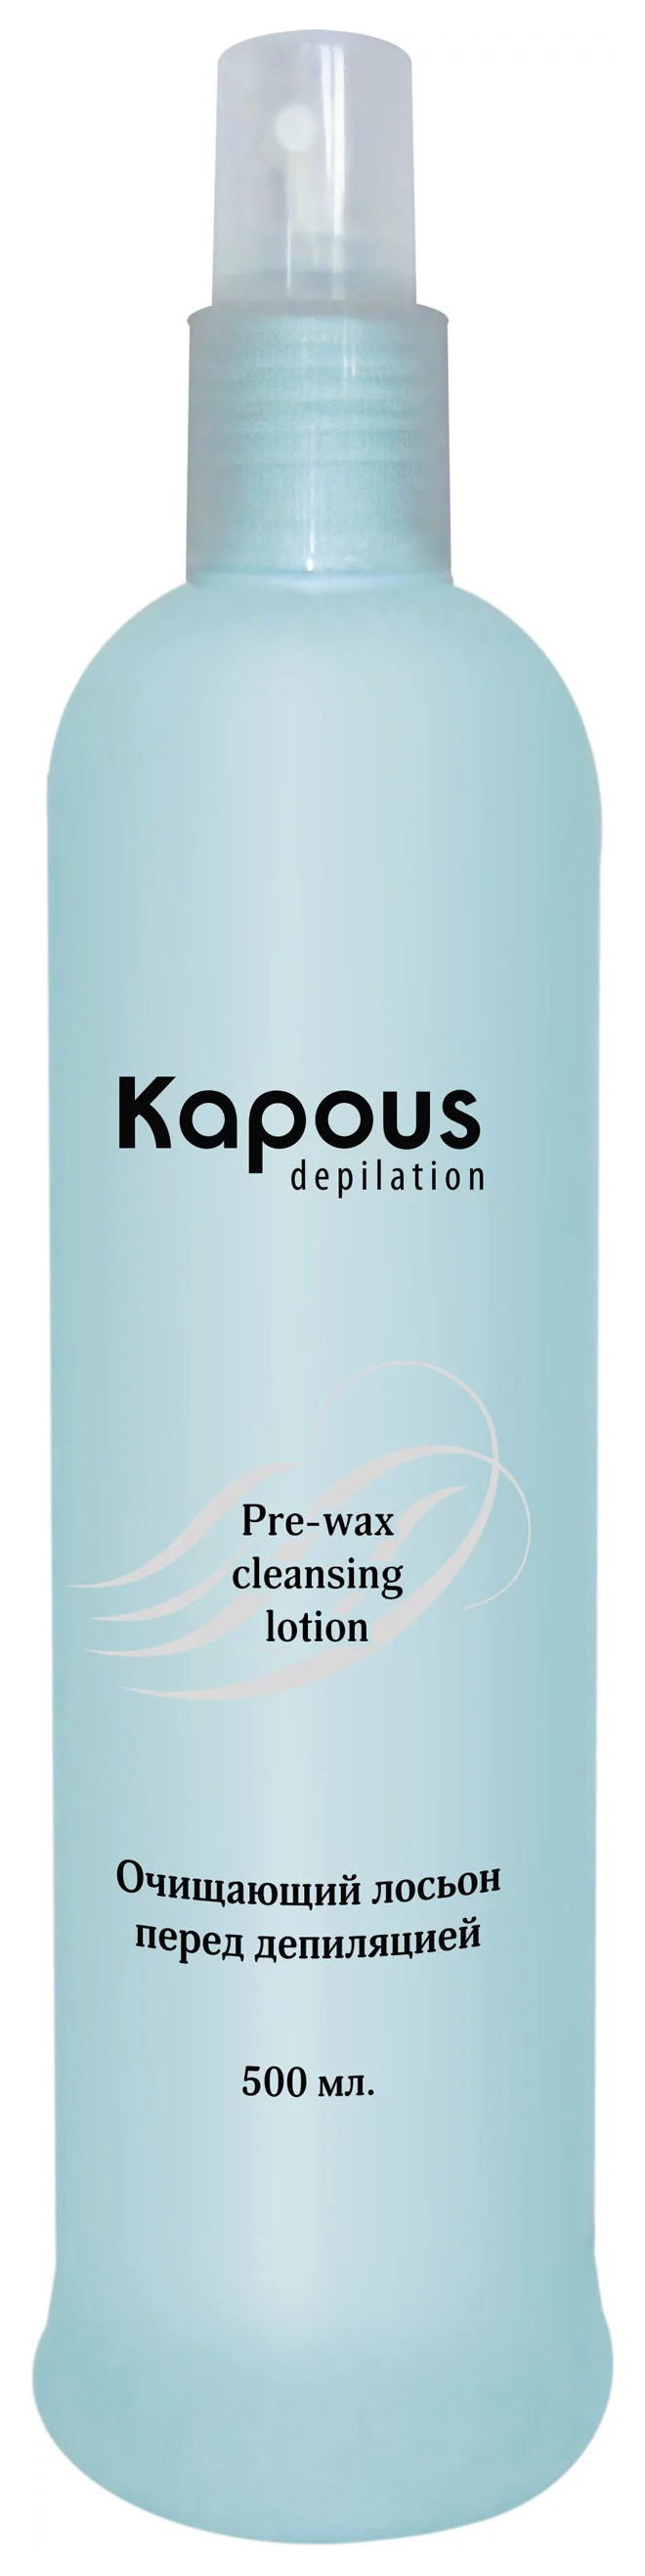 Очищающий лосьон перед депиляцией Kapous Professional 500 мл средство для демакияжа перед депиляцией сerazyme 1204894 400 мл